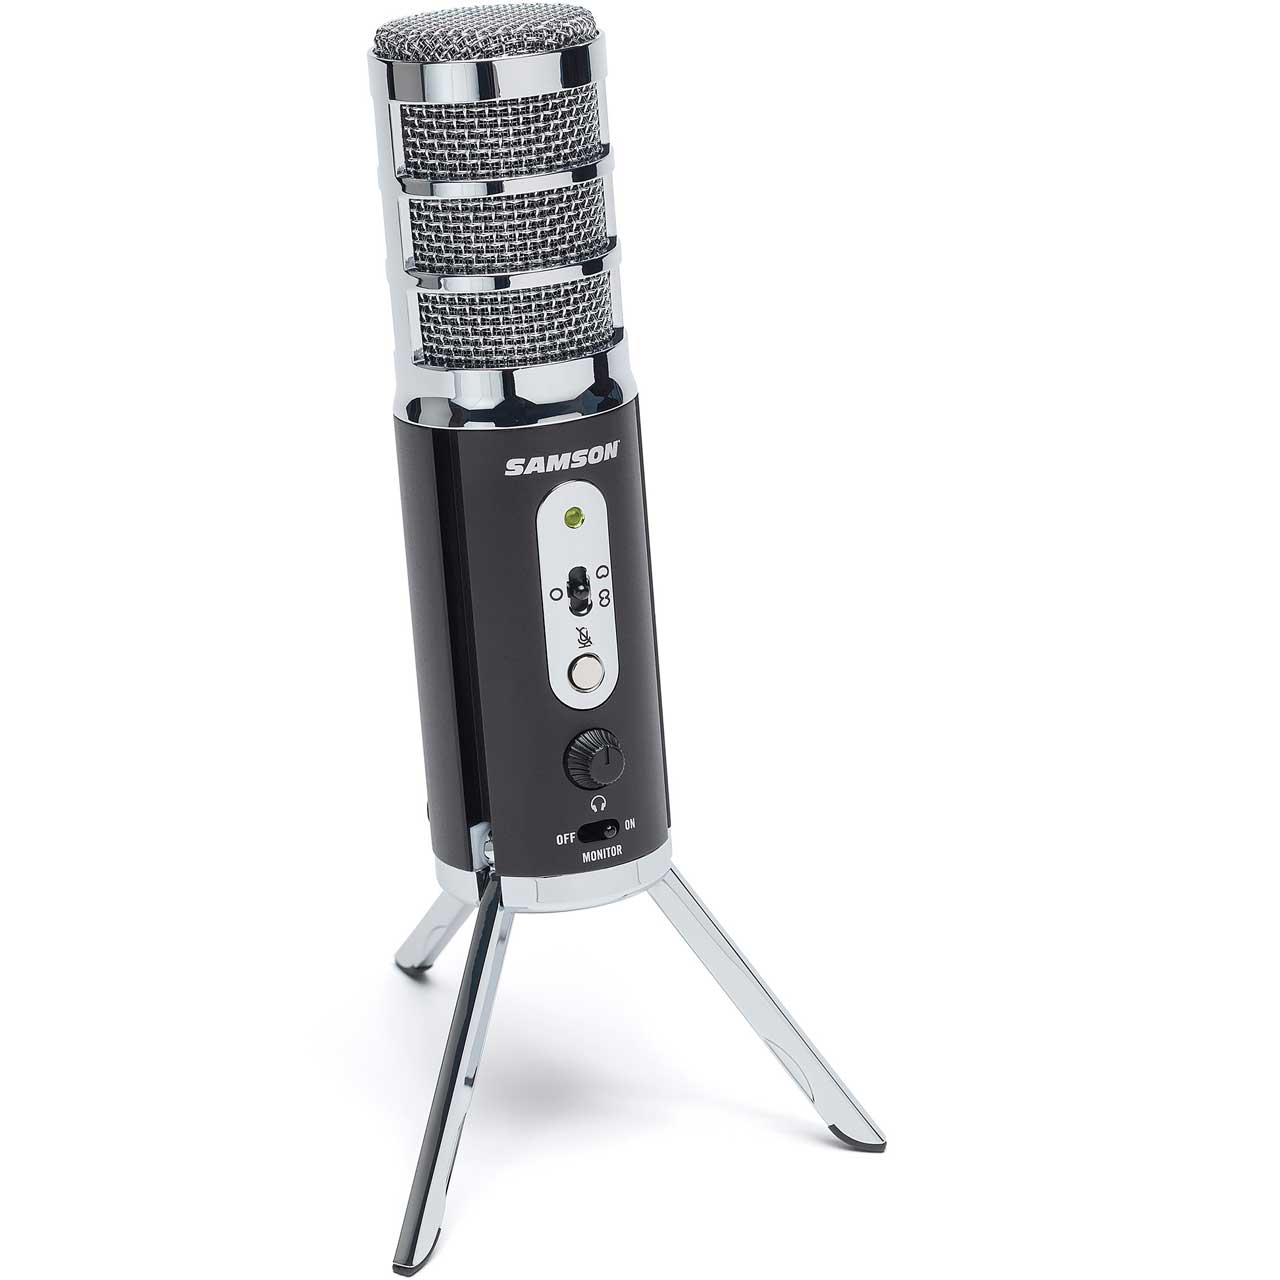 Audio-Technica Creator Pack Review - Audio-Technica ATR2500x-USB Microphone